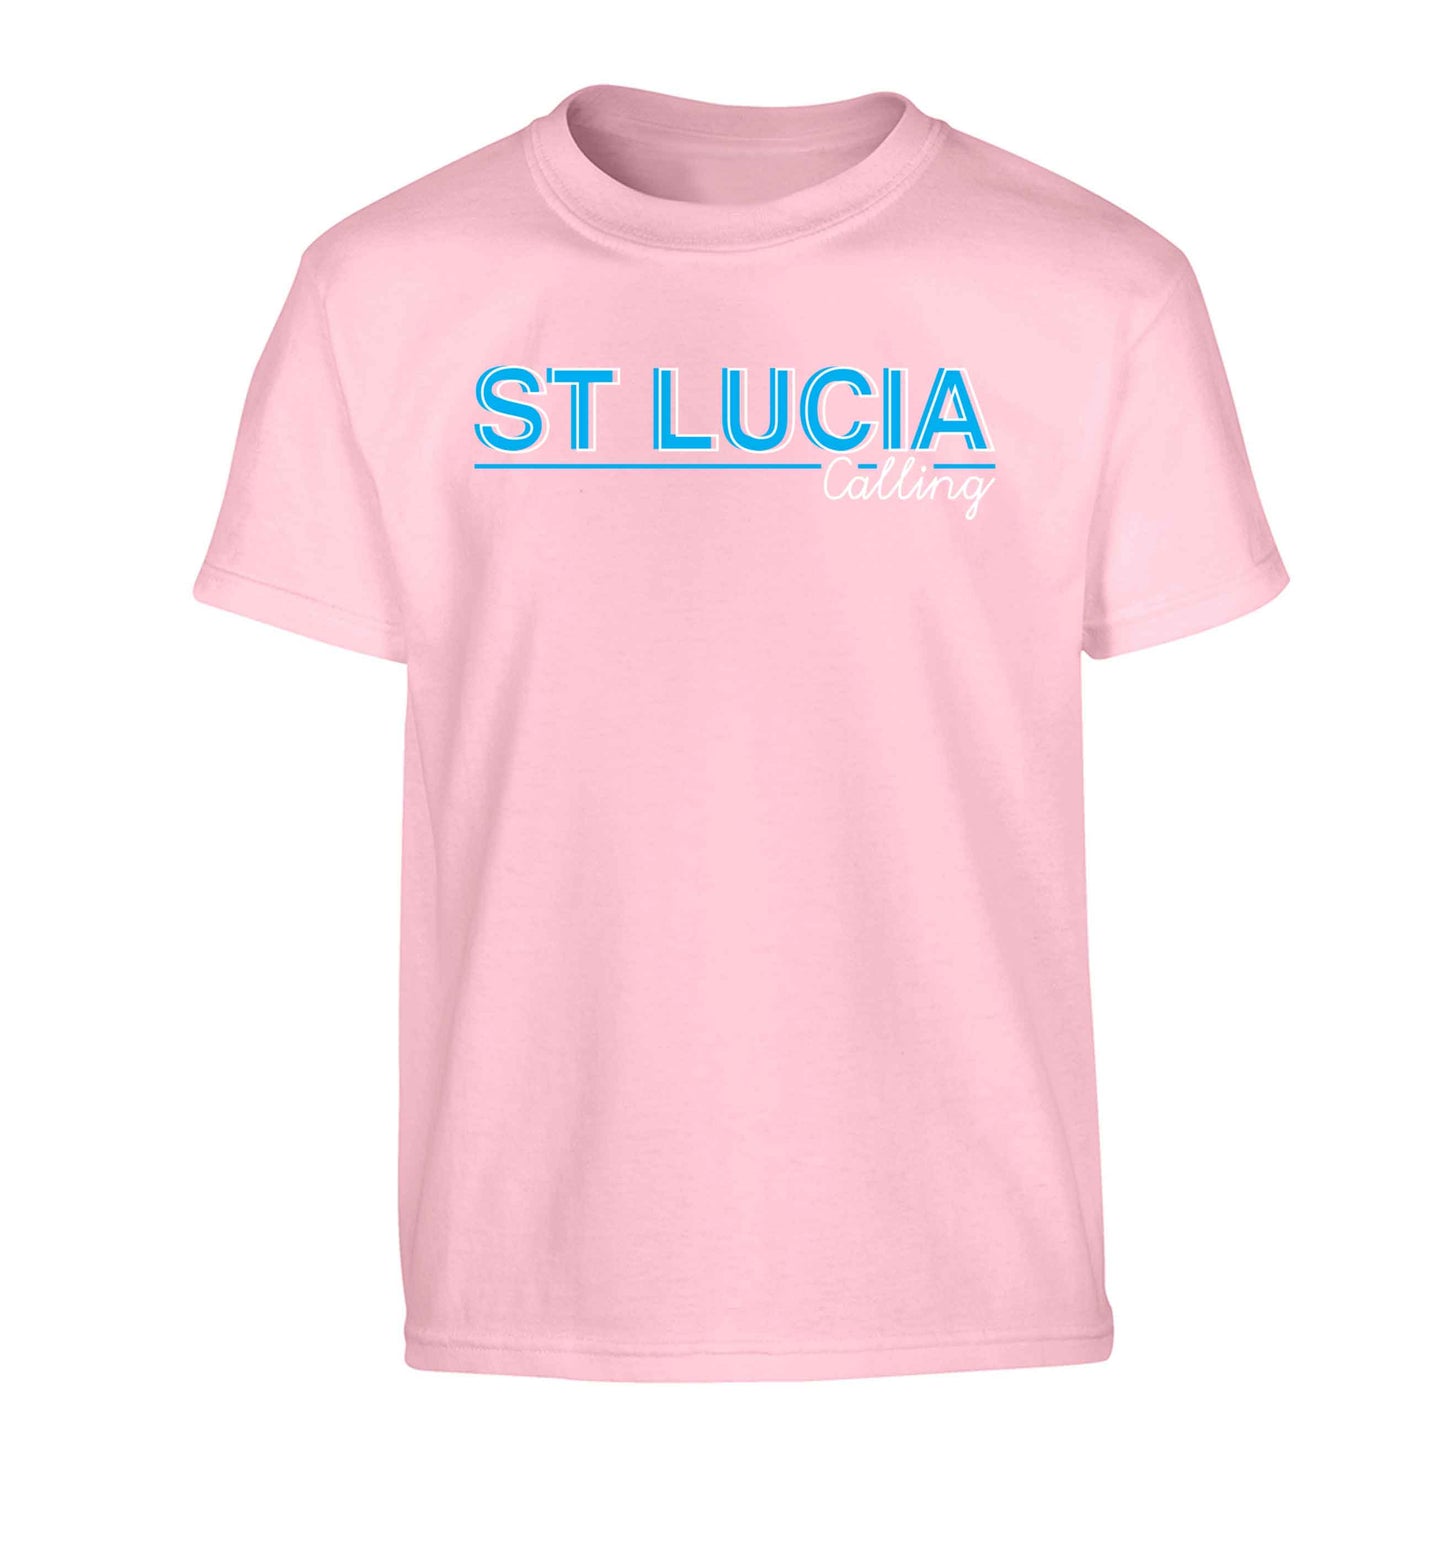 St Lucia calling Children's light pink Tshirt 12-13 Years